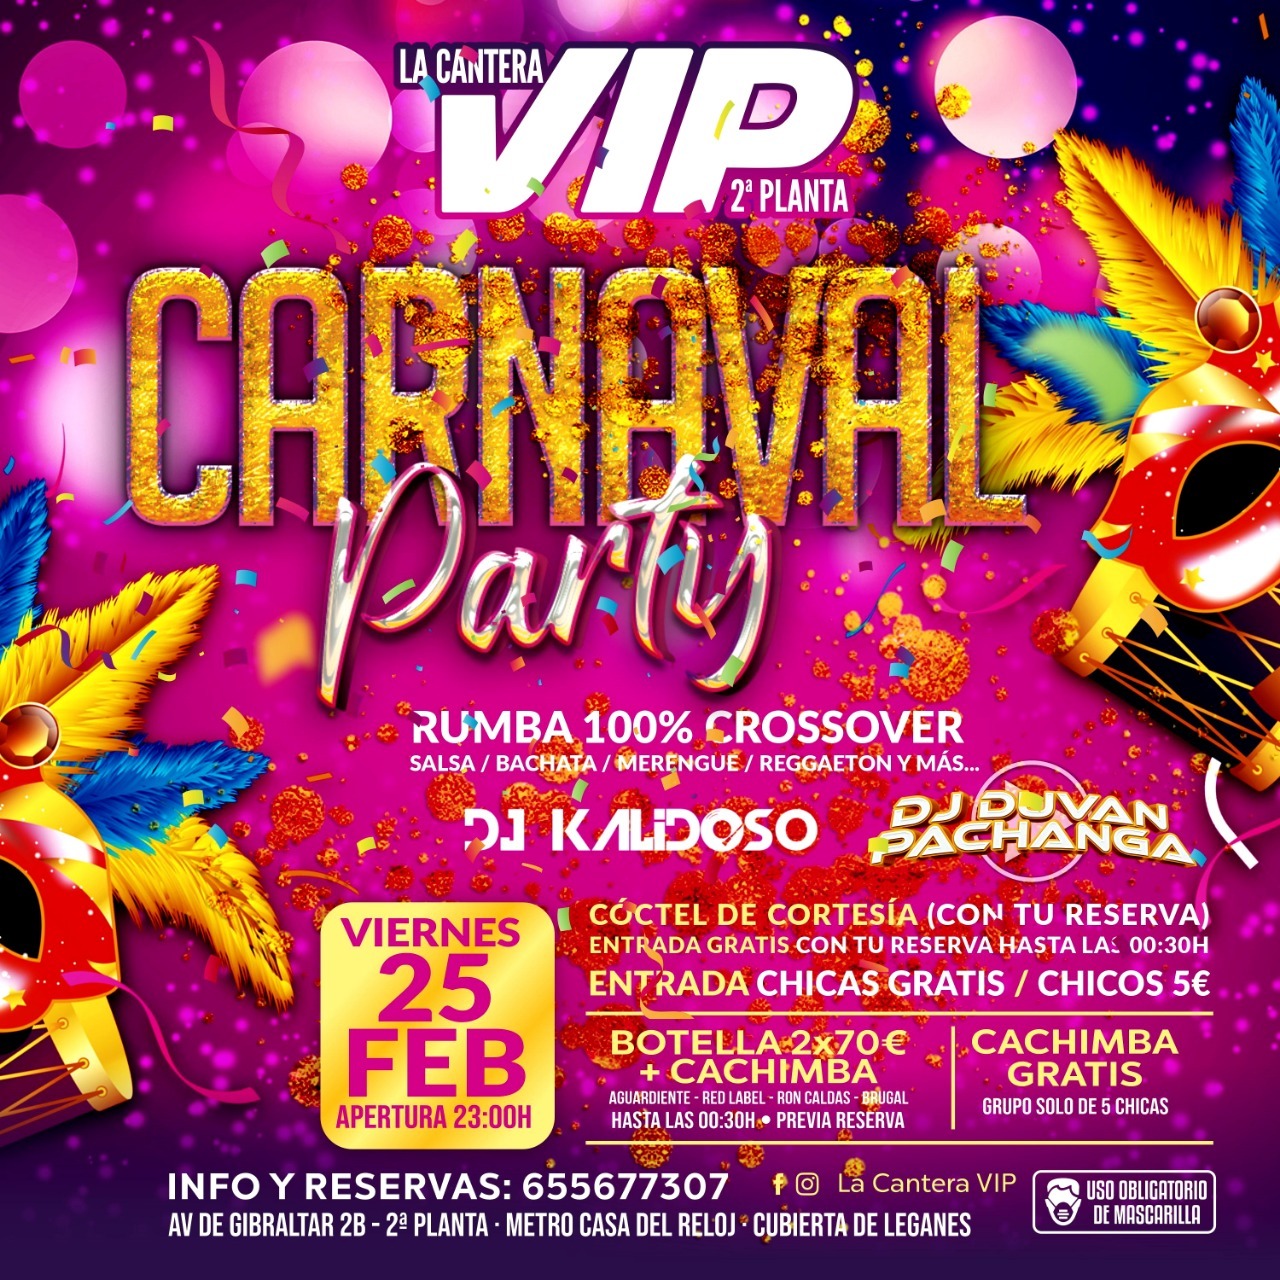 Carnaval Party en la discoteca La Cantera Vip.jpg